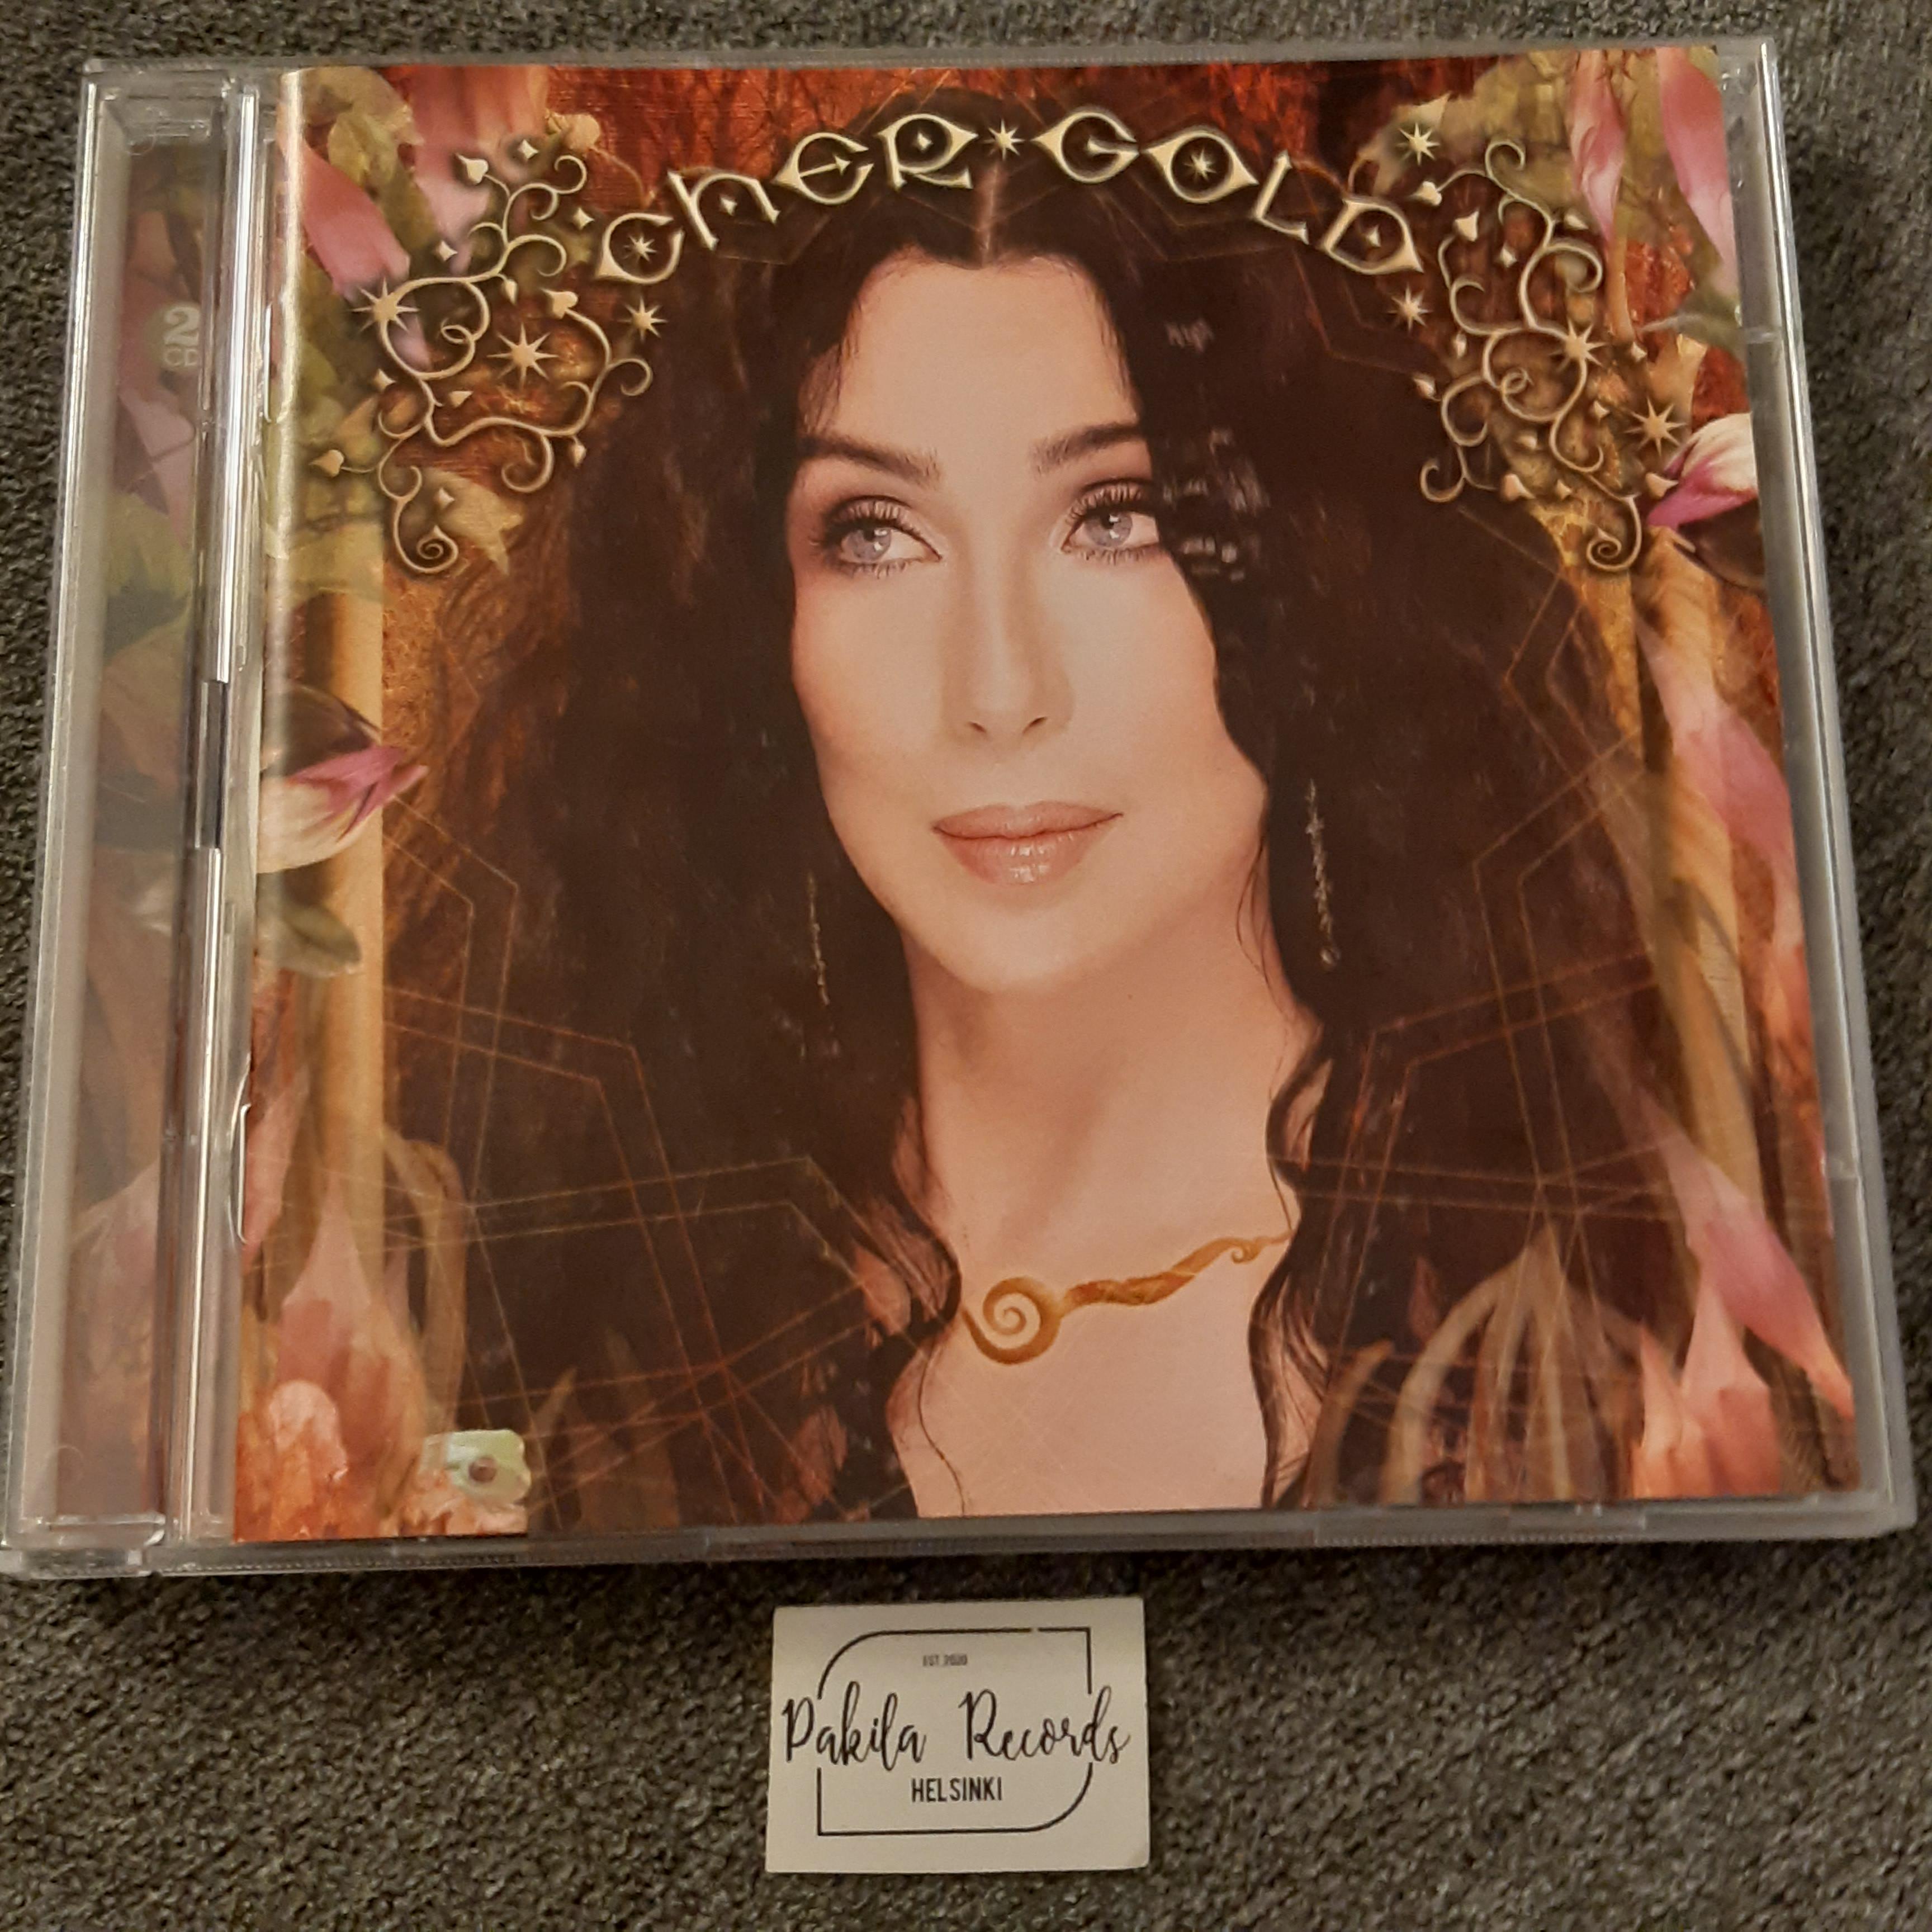 Cher - Gold - 2 CD (käytetty)